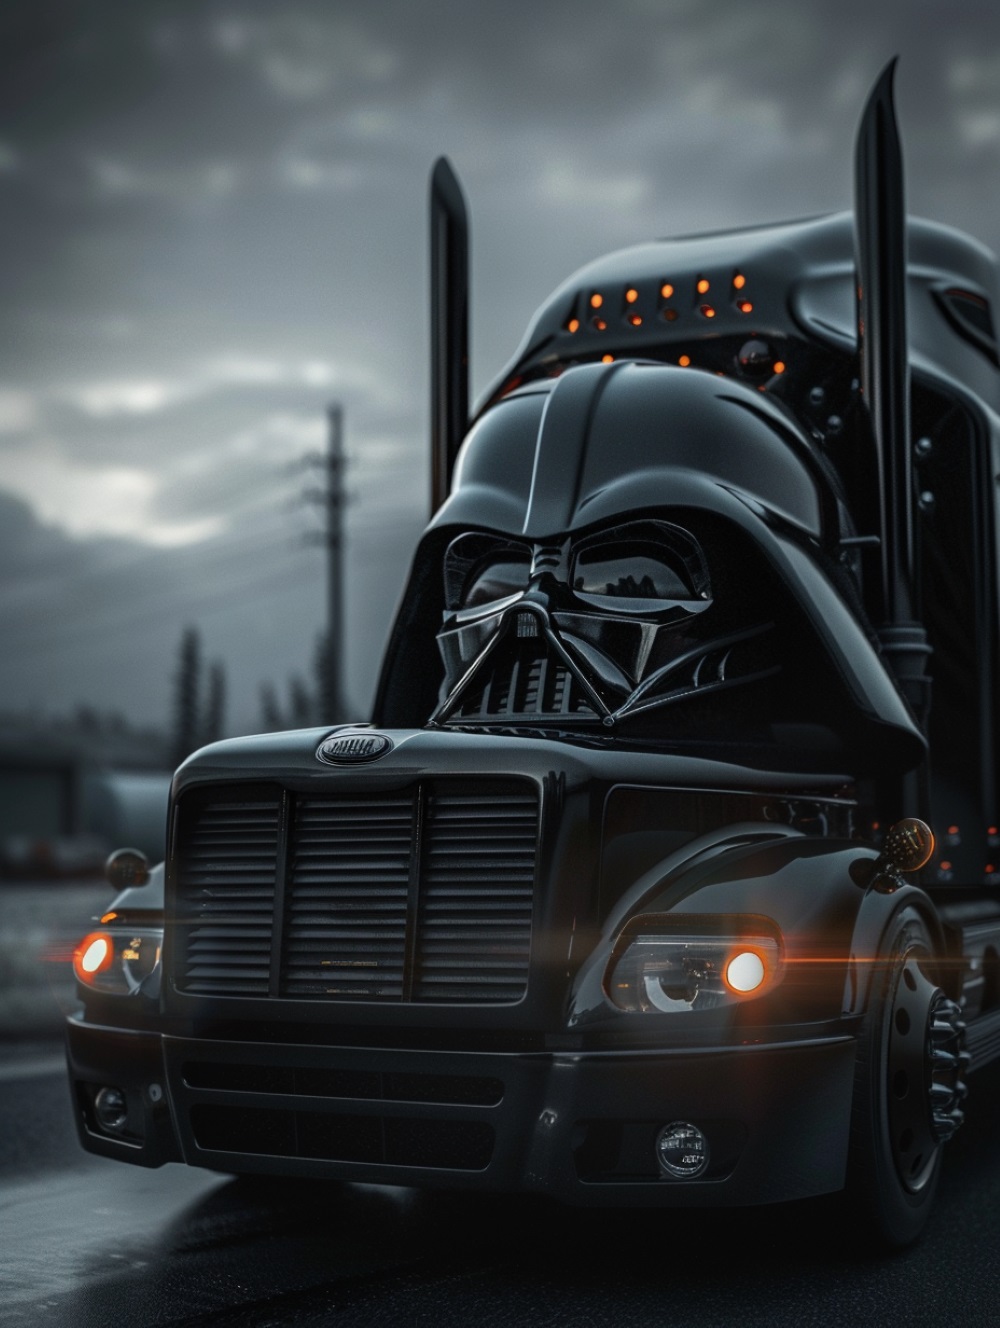 Darth Vader cabin on a heavy truck